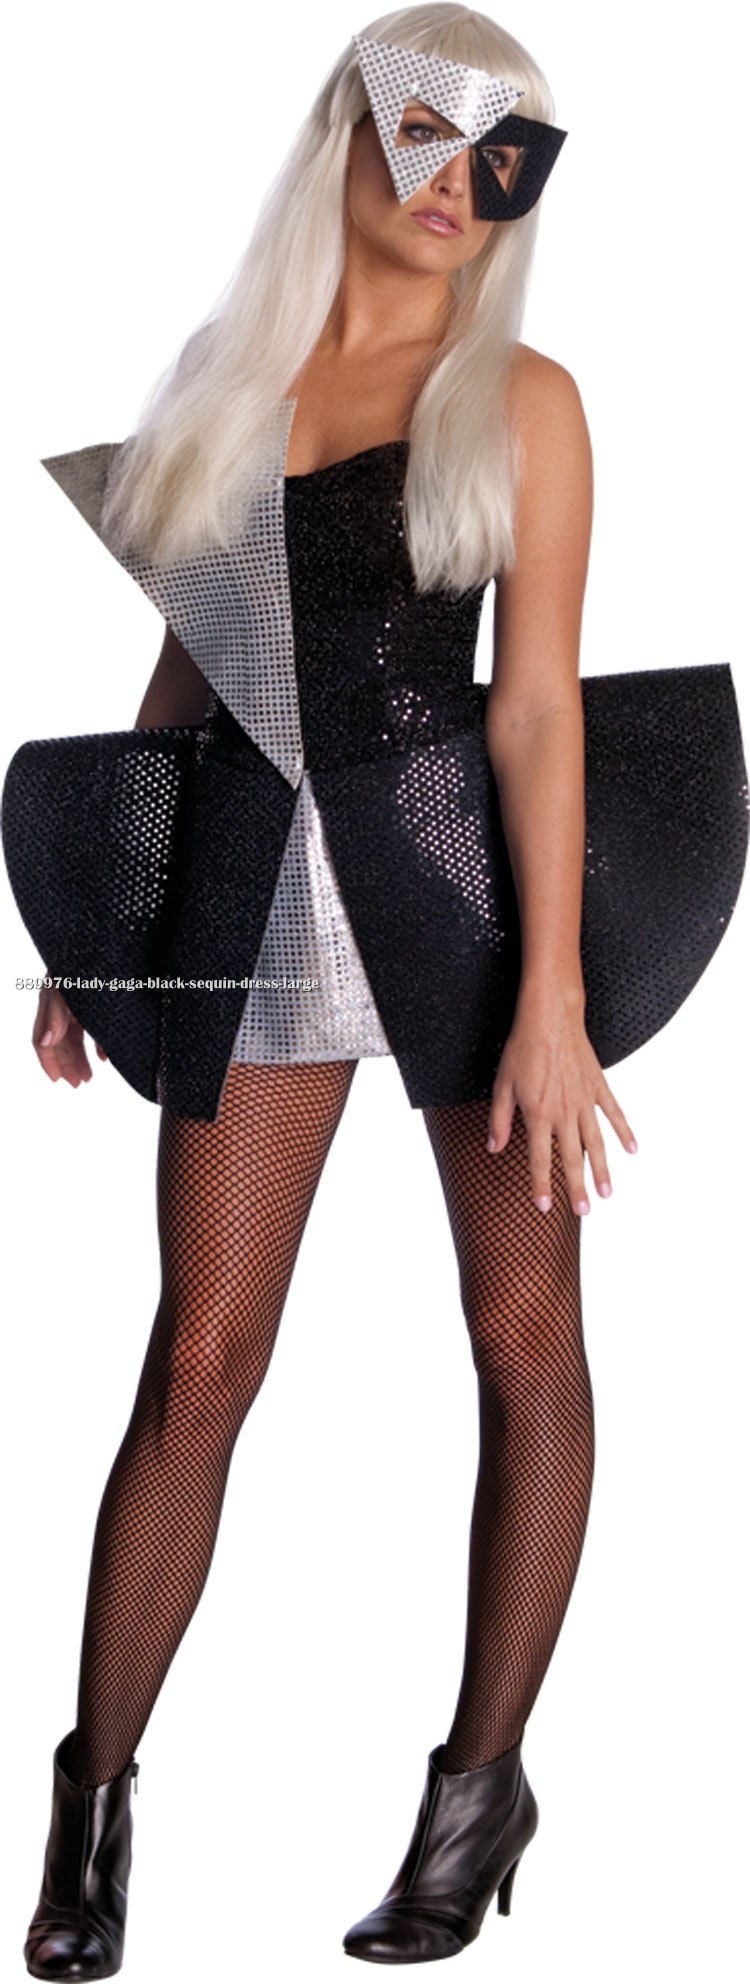 Lady Gaga Black Sequin Dress Costume - Click Image to Close